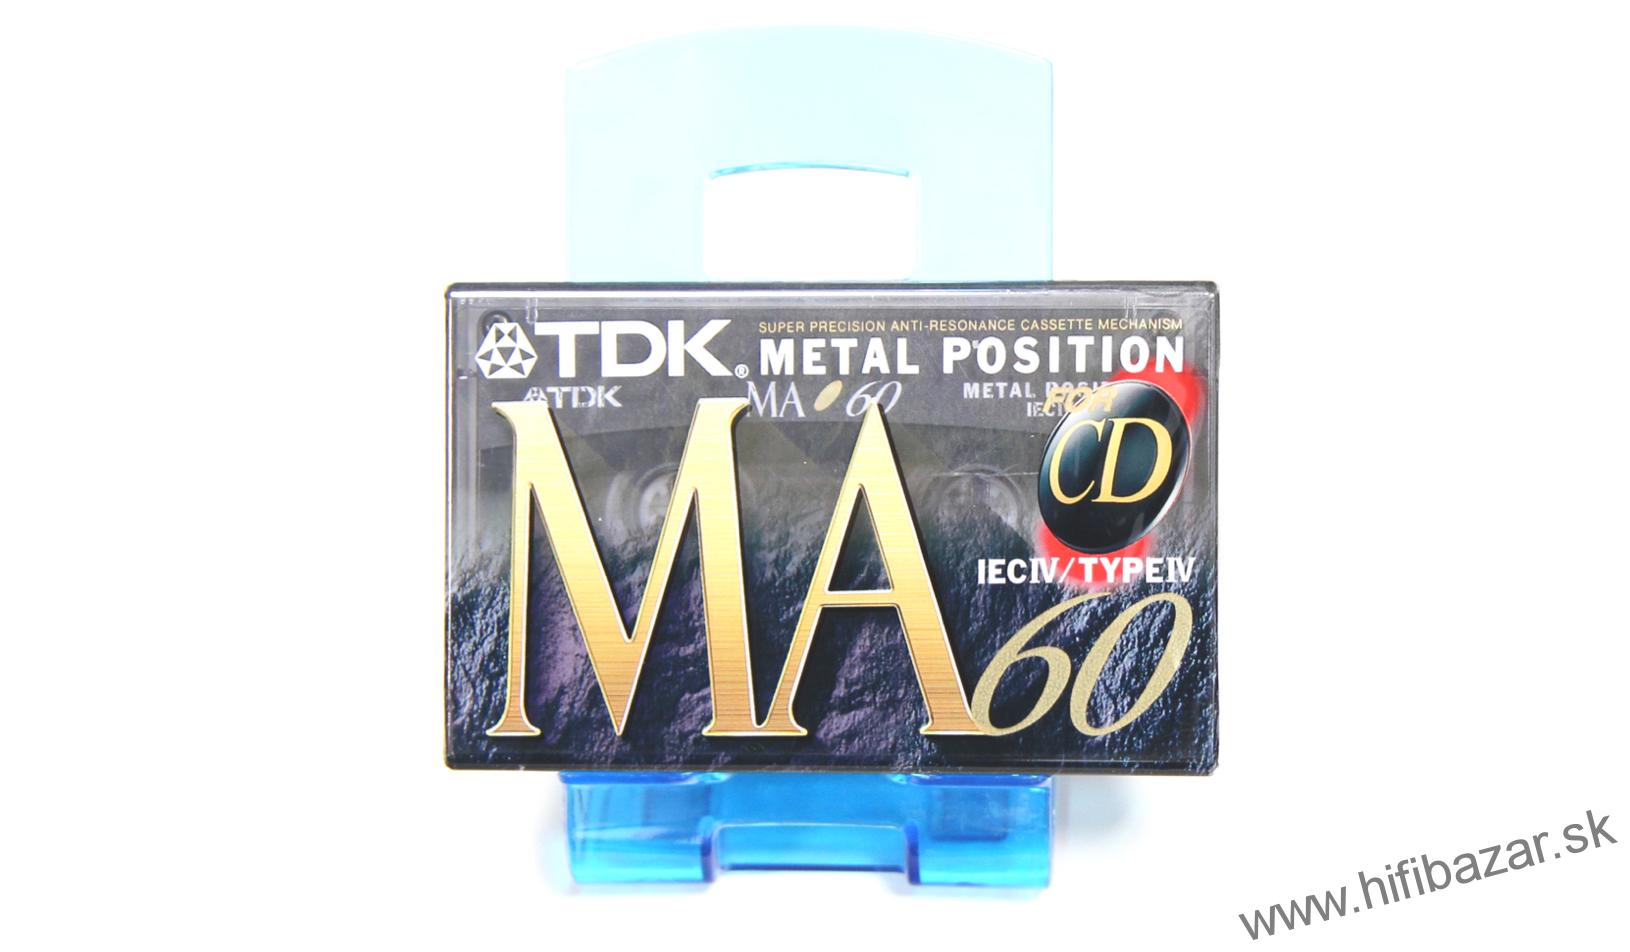 TDK MA-60 Position Metal